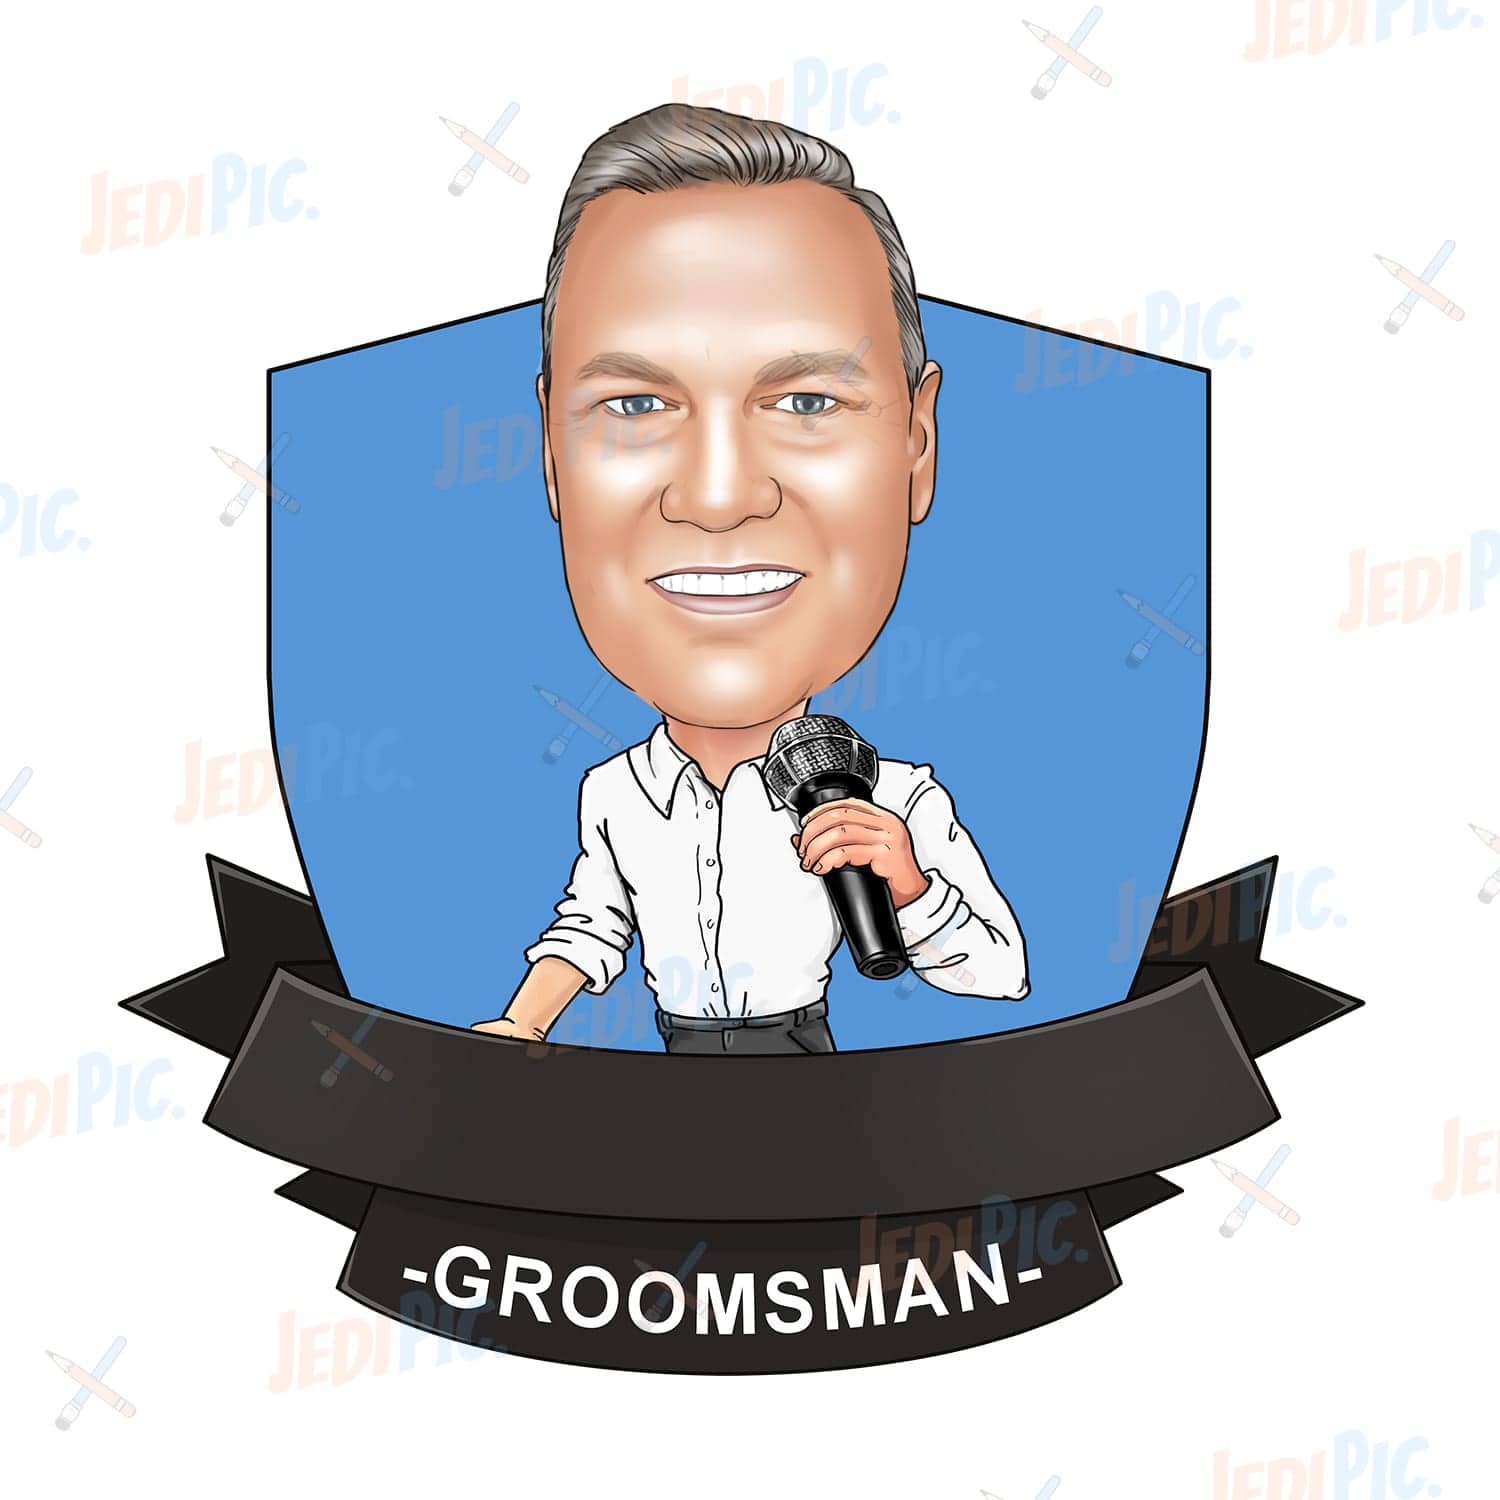 Groomsman Digital Drawing with Big Head